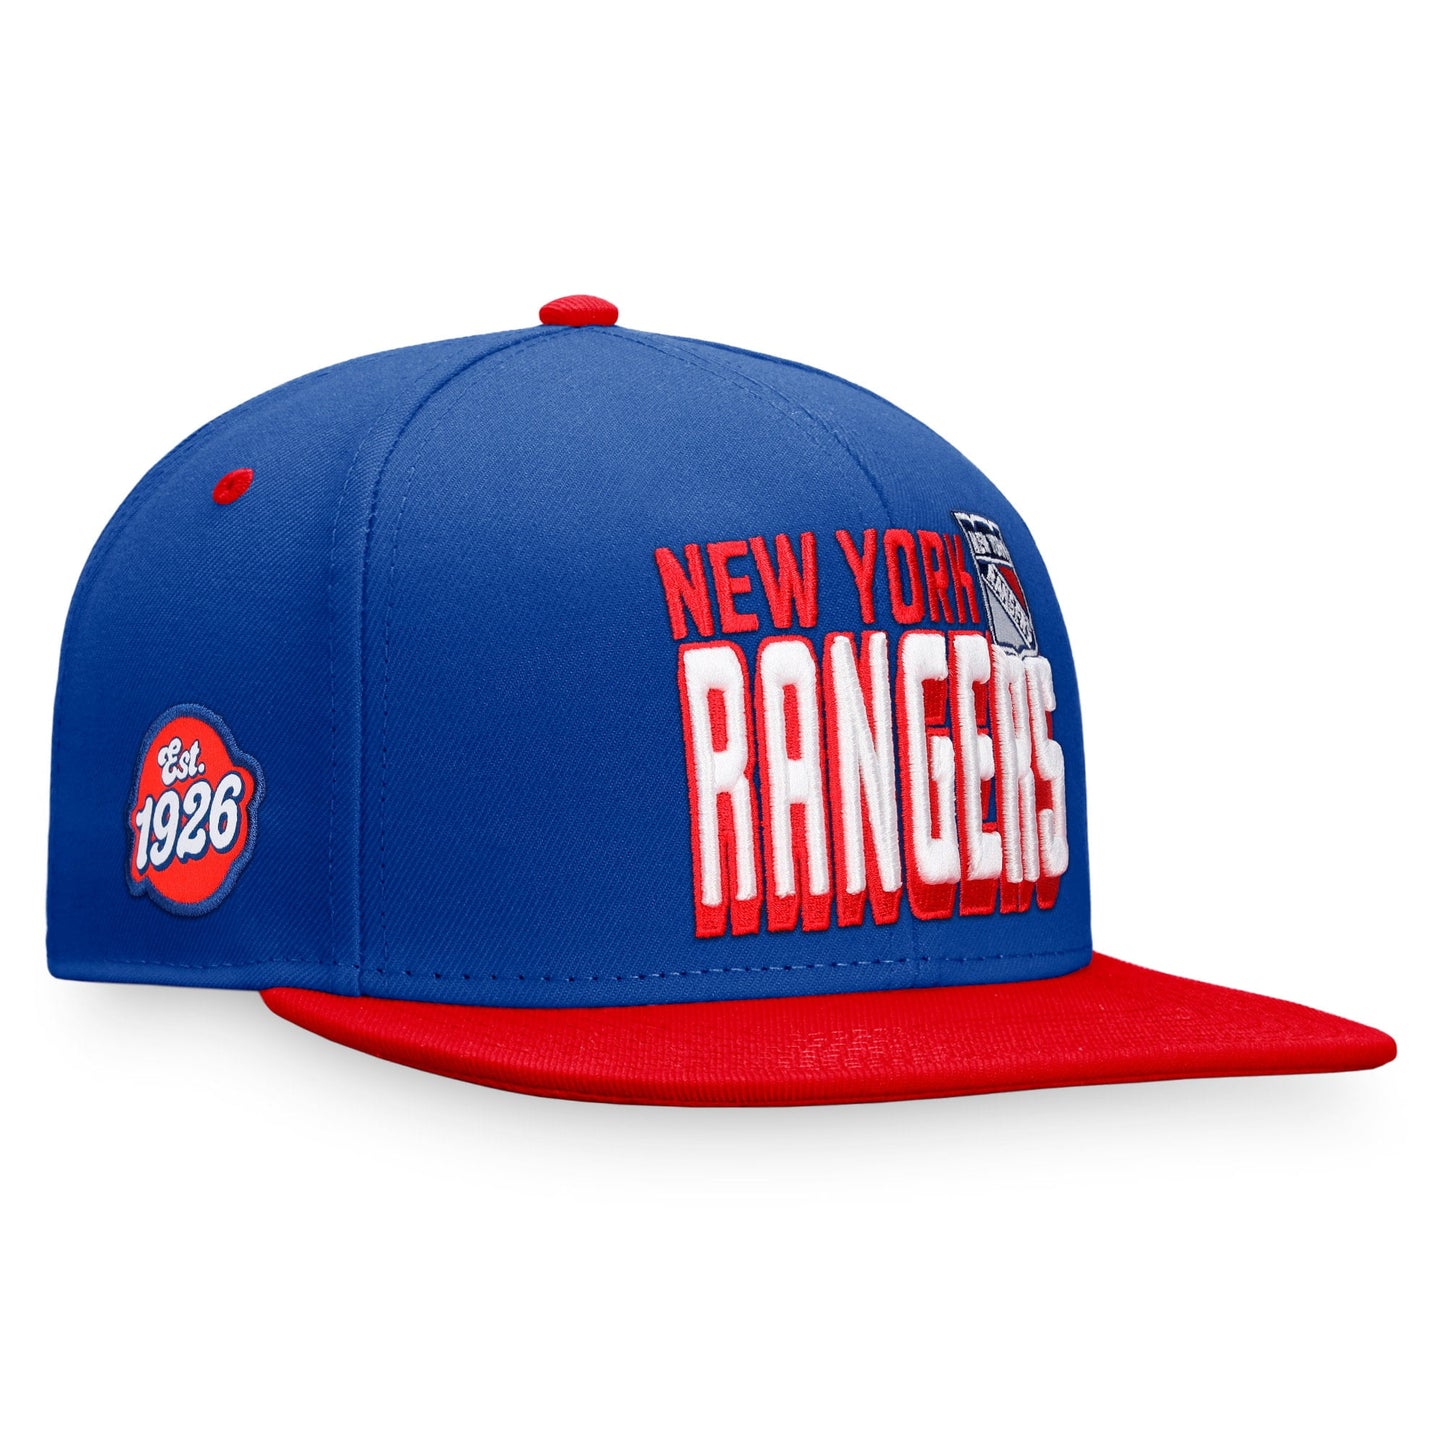 Men's Fanatics Branded Blue/Red New York Rangers Heritage Retro Two-Tone Snapback Hat - OSFA